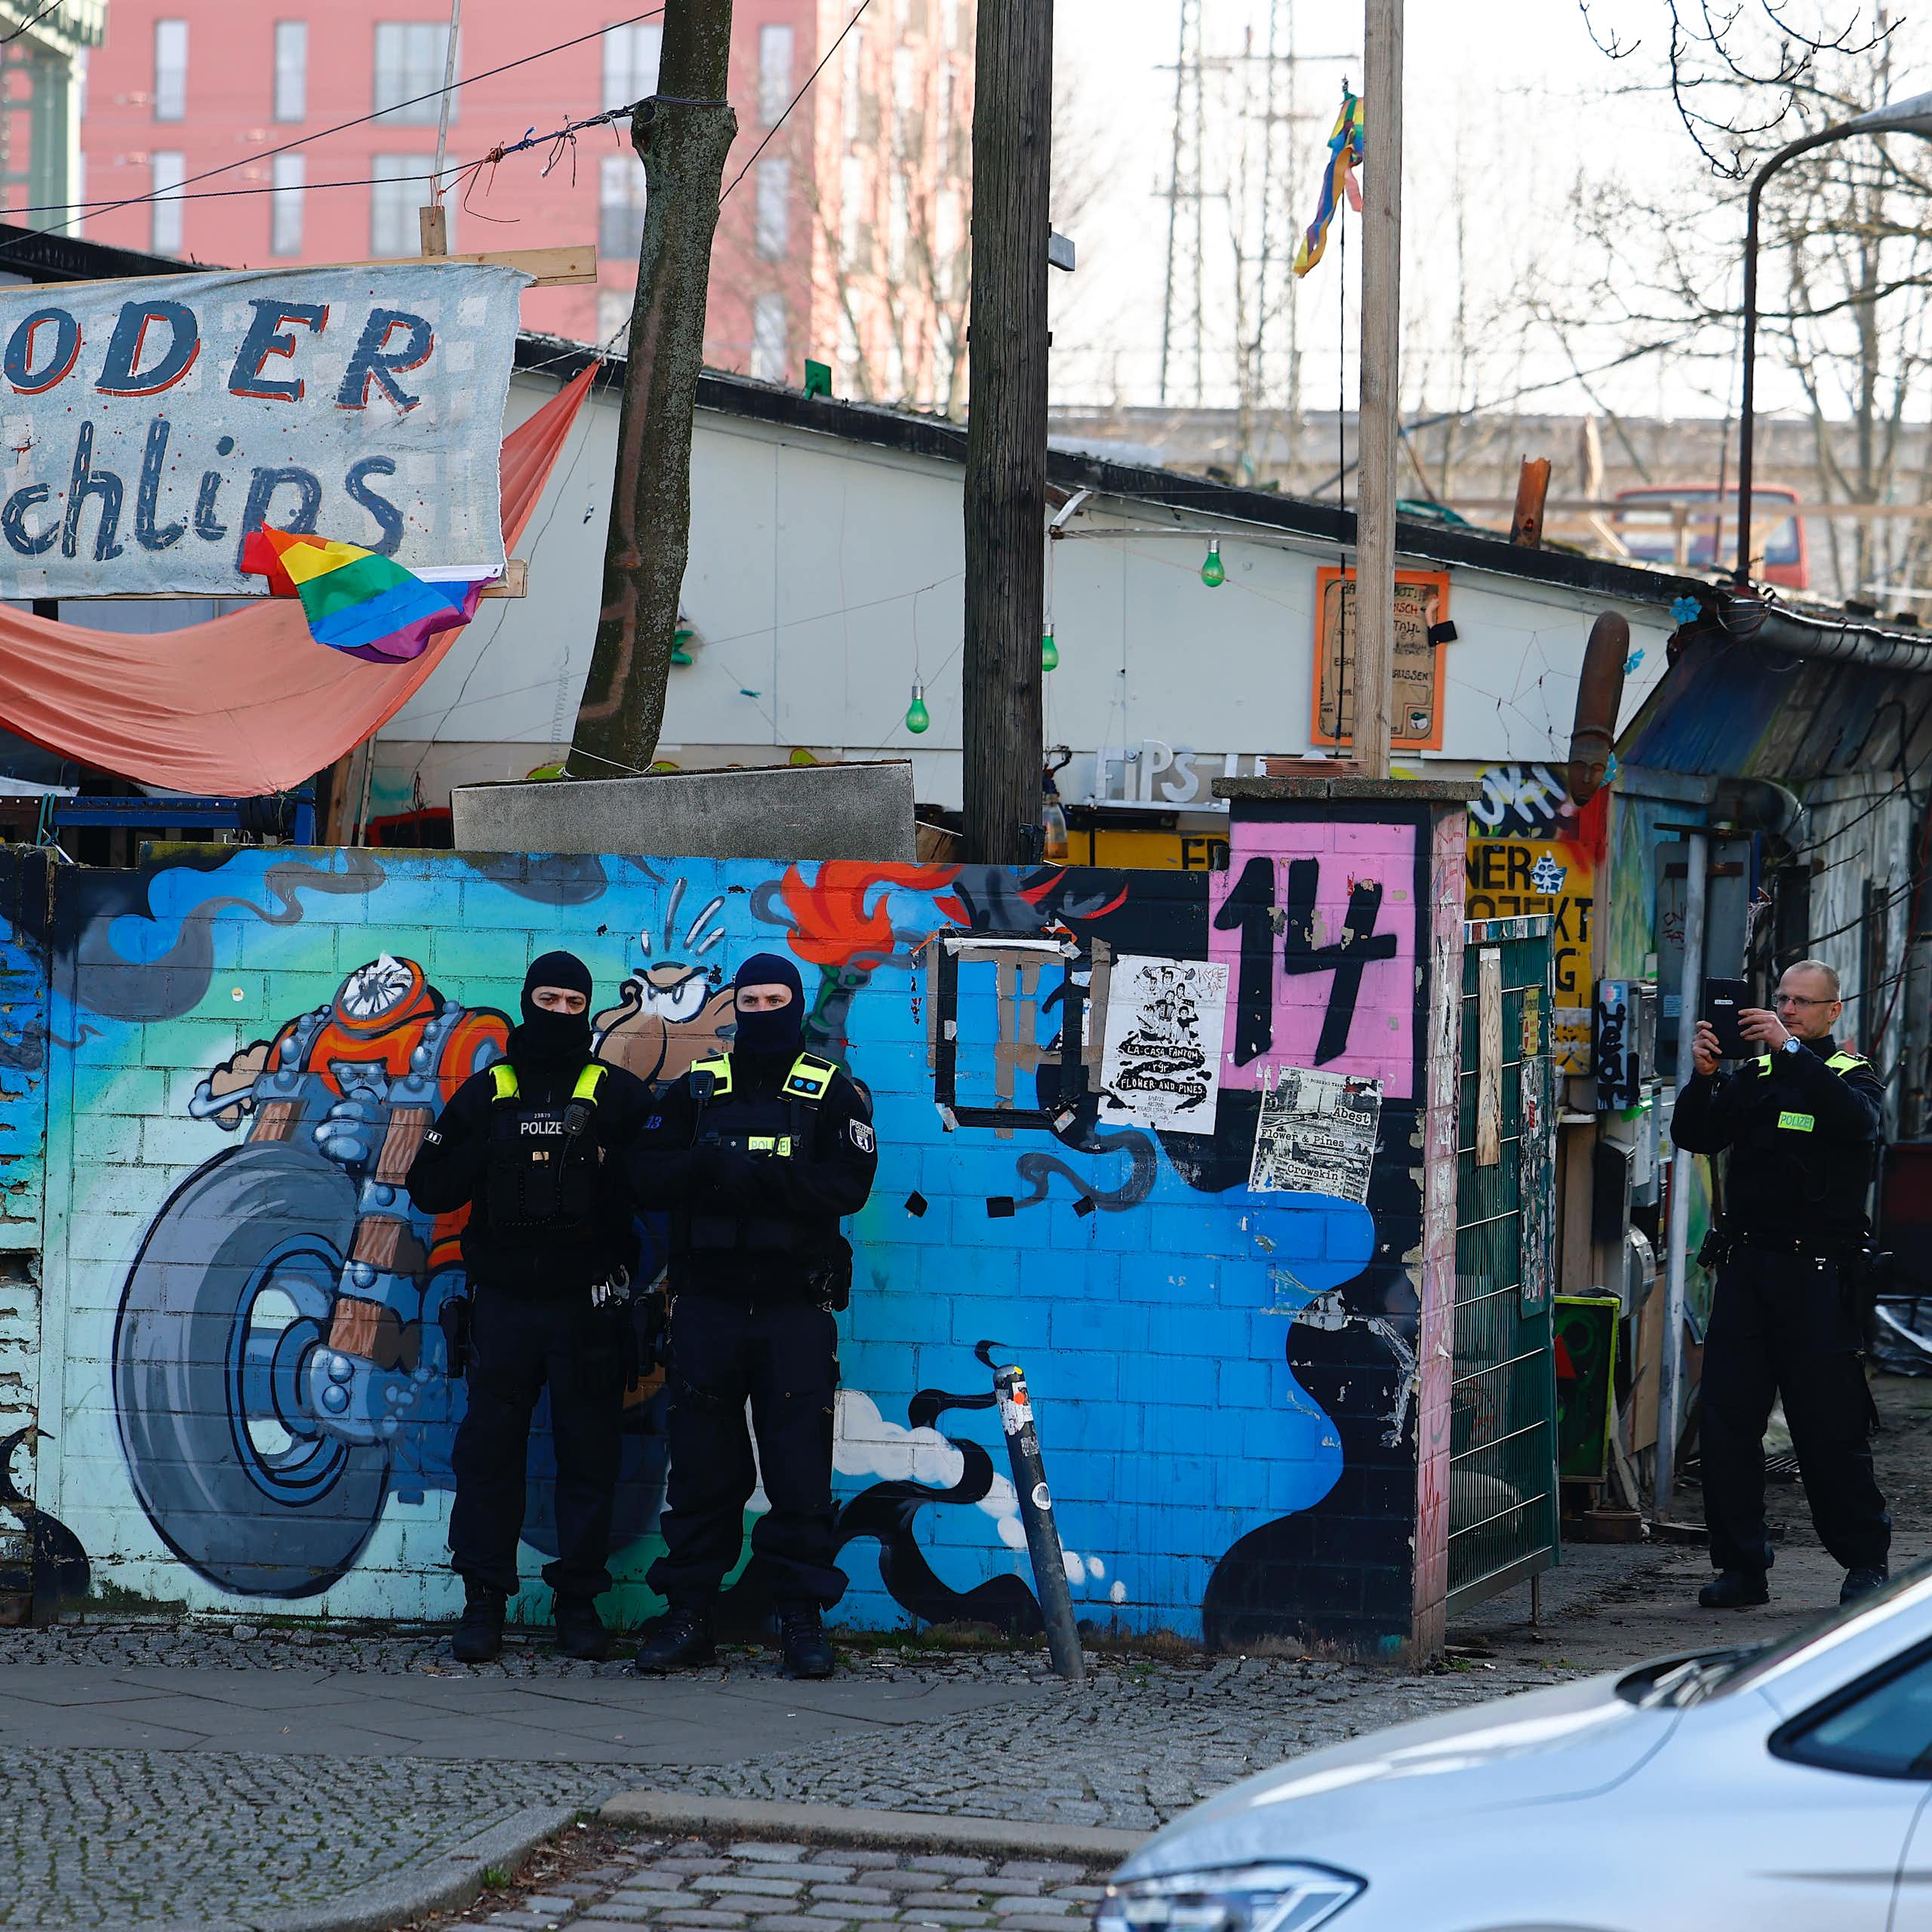 Police raiding a run down looking aras with graffiti on the walls.